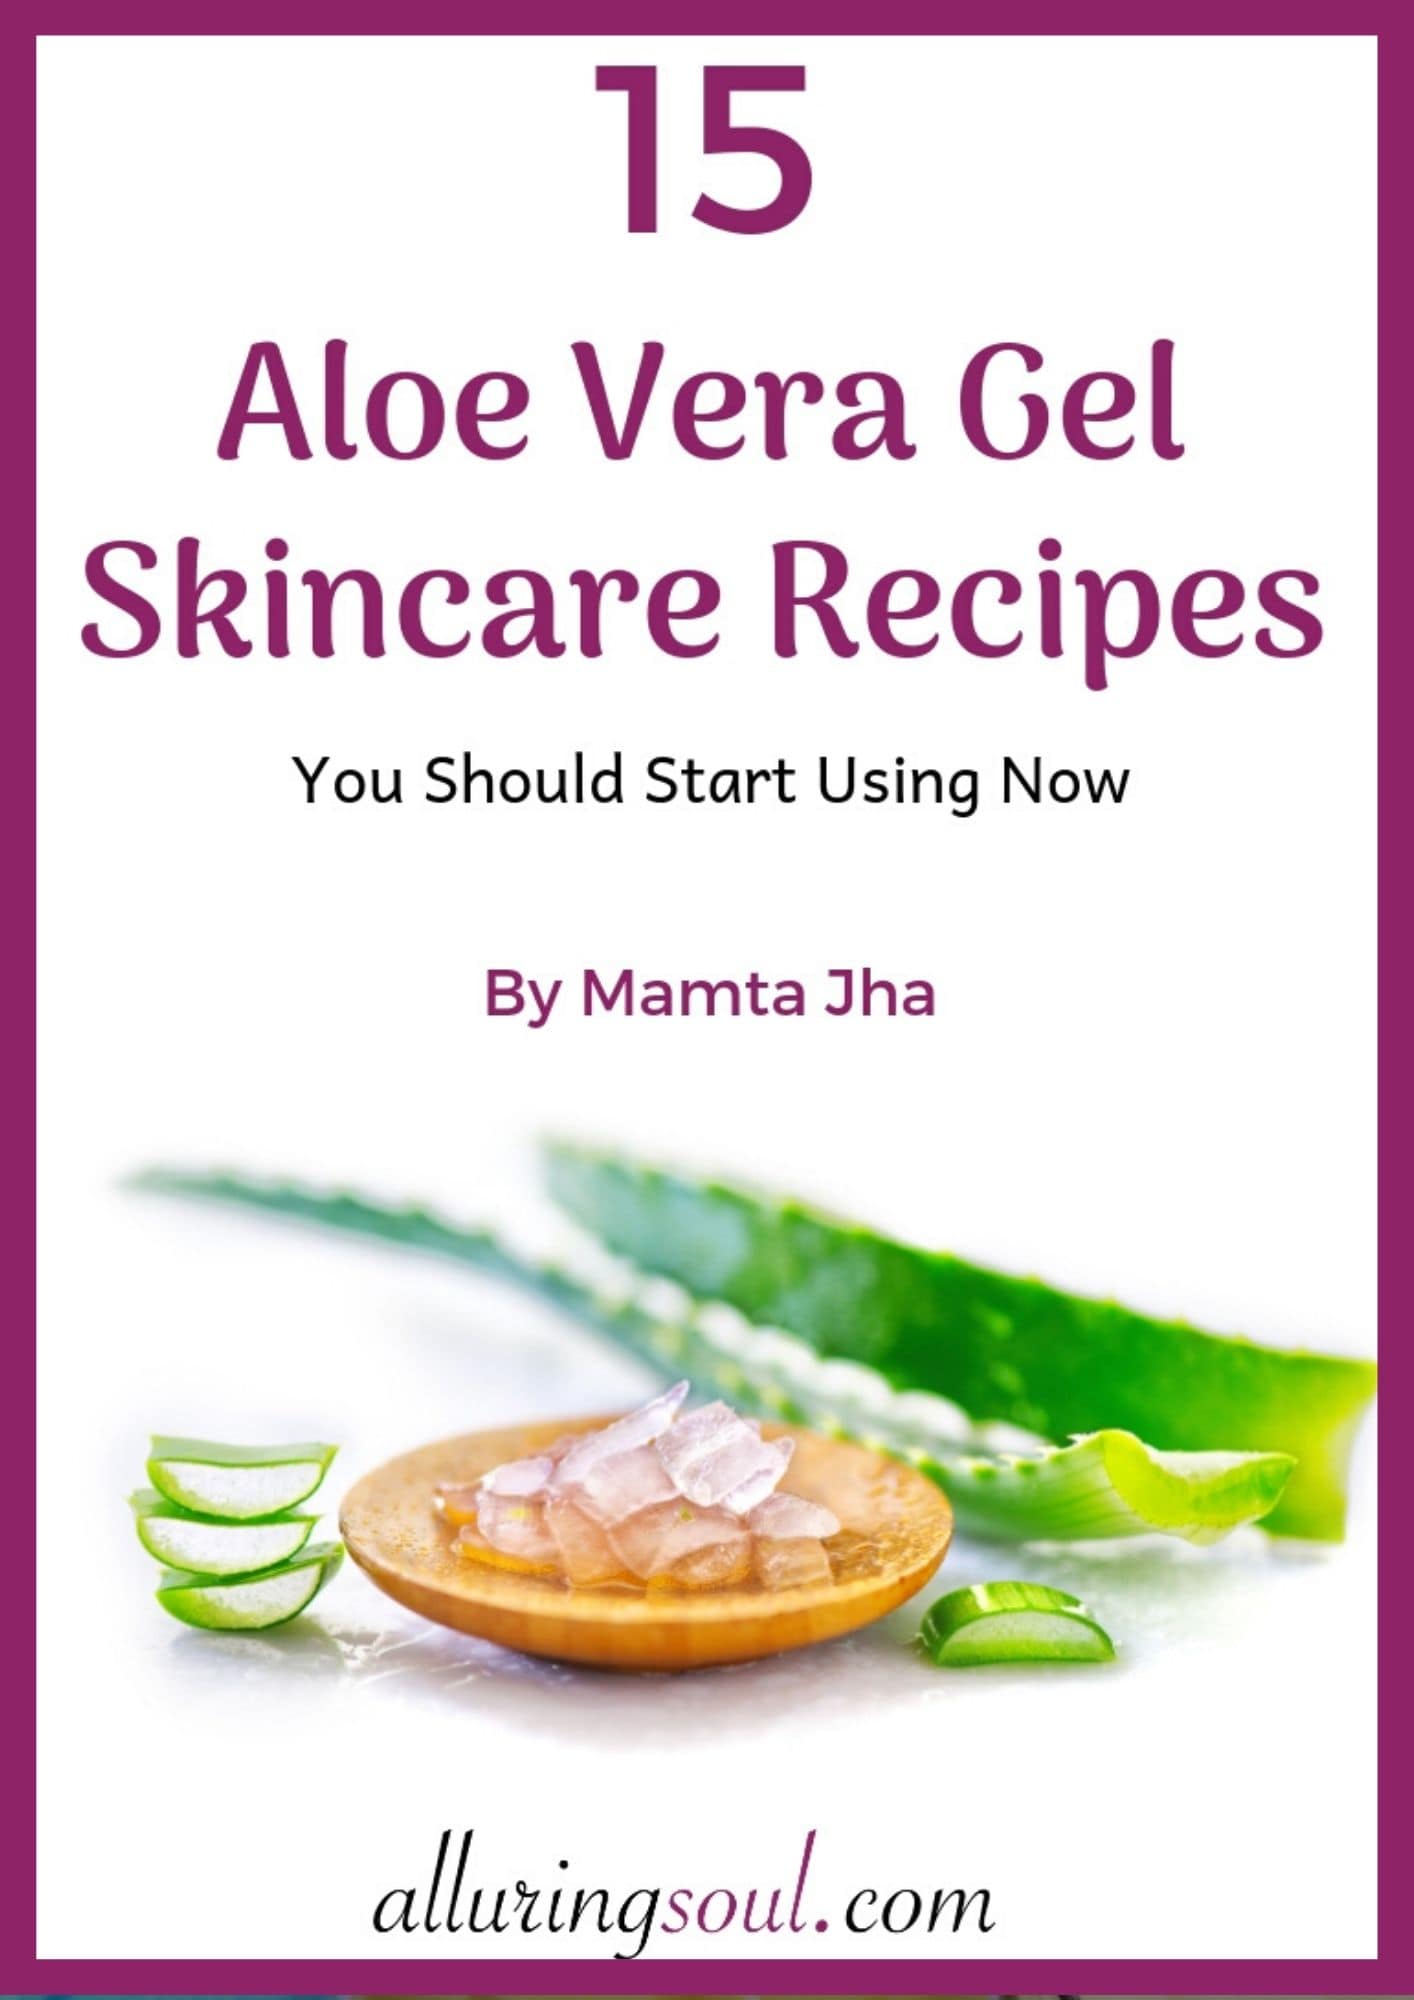 15 Aloe Vera Gel Skincare Recipes